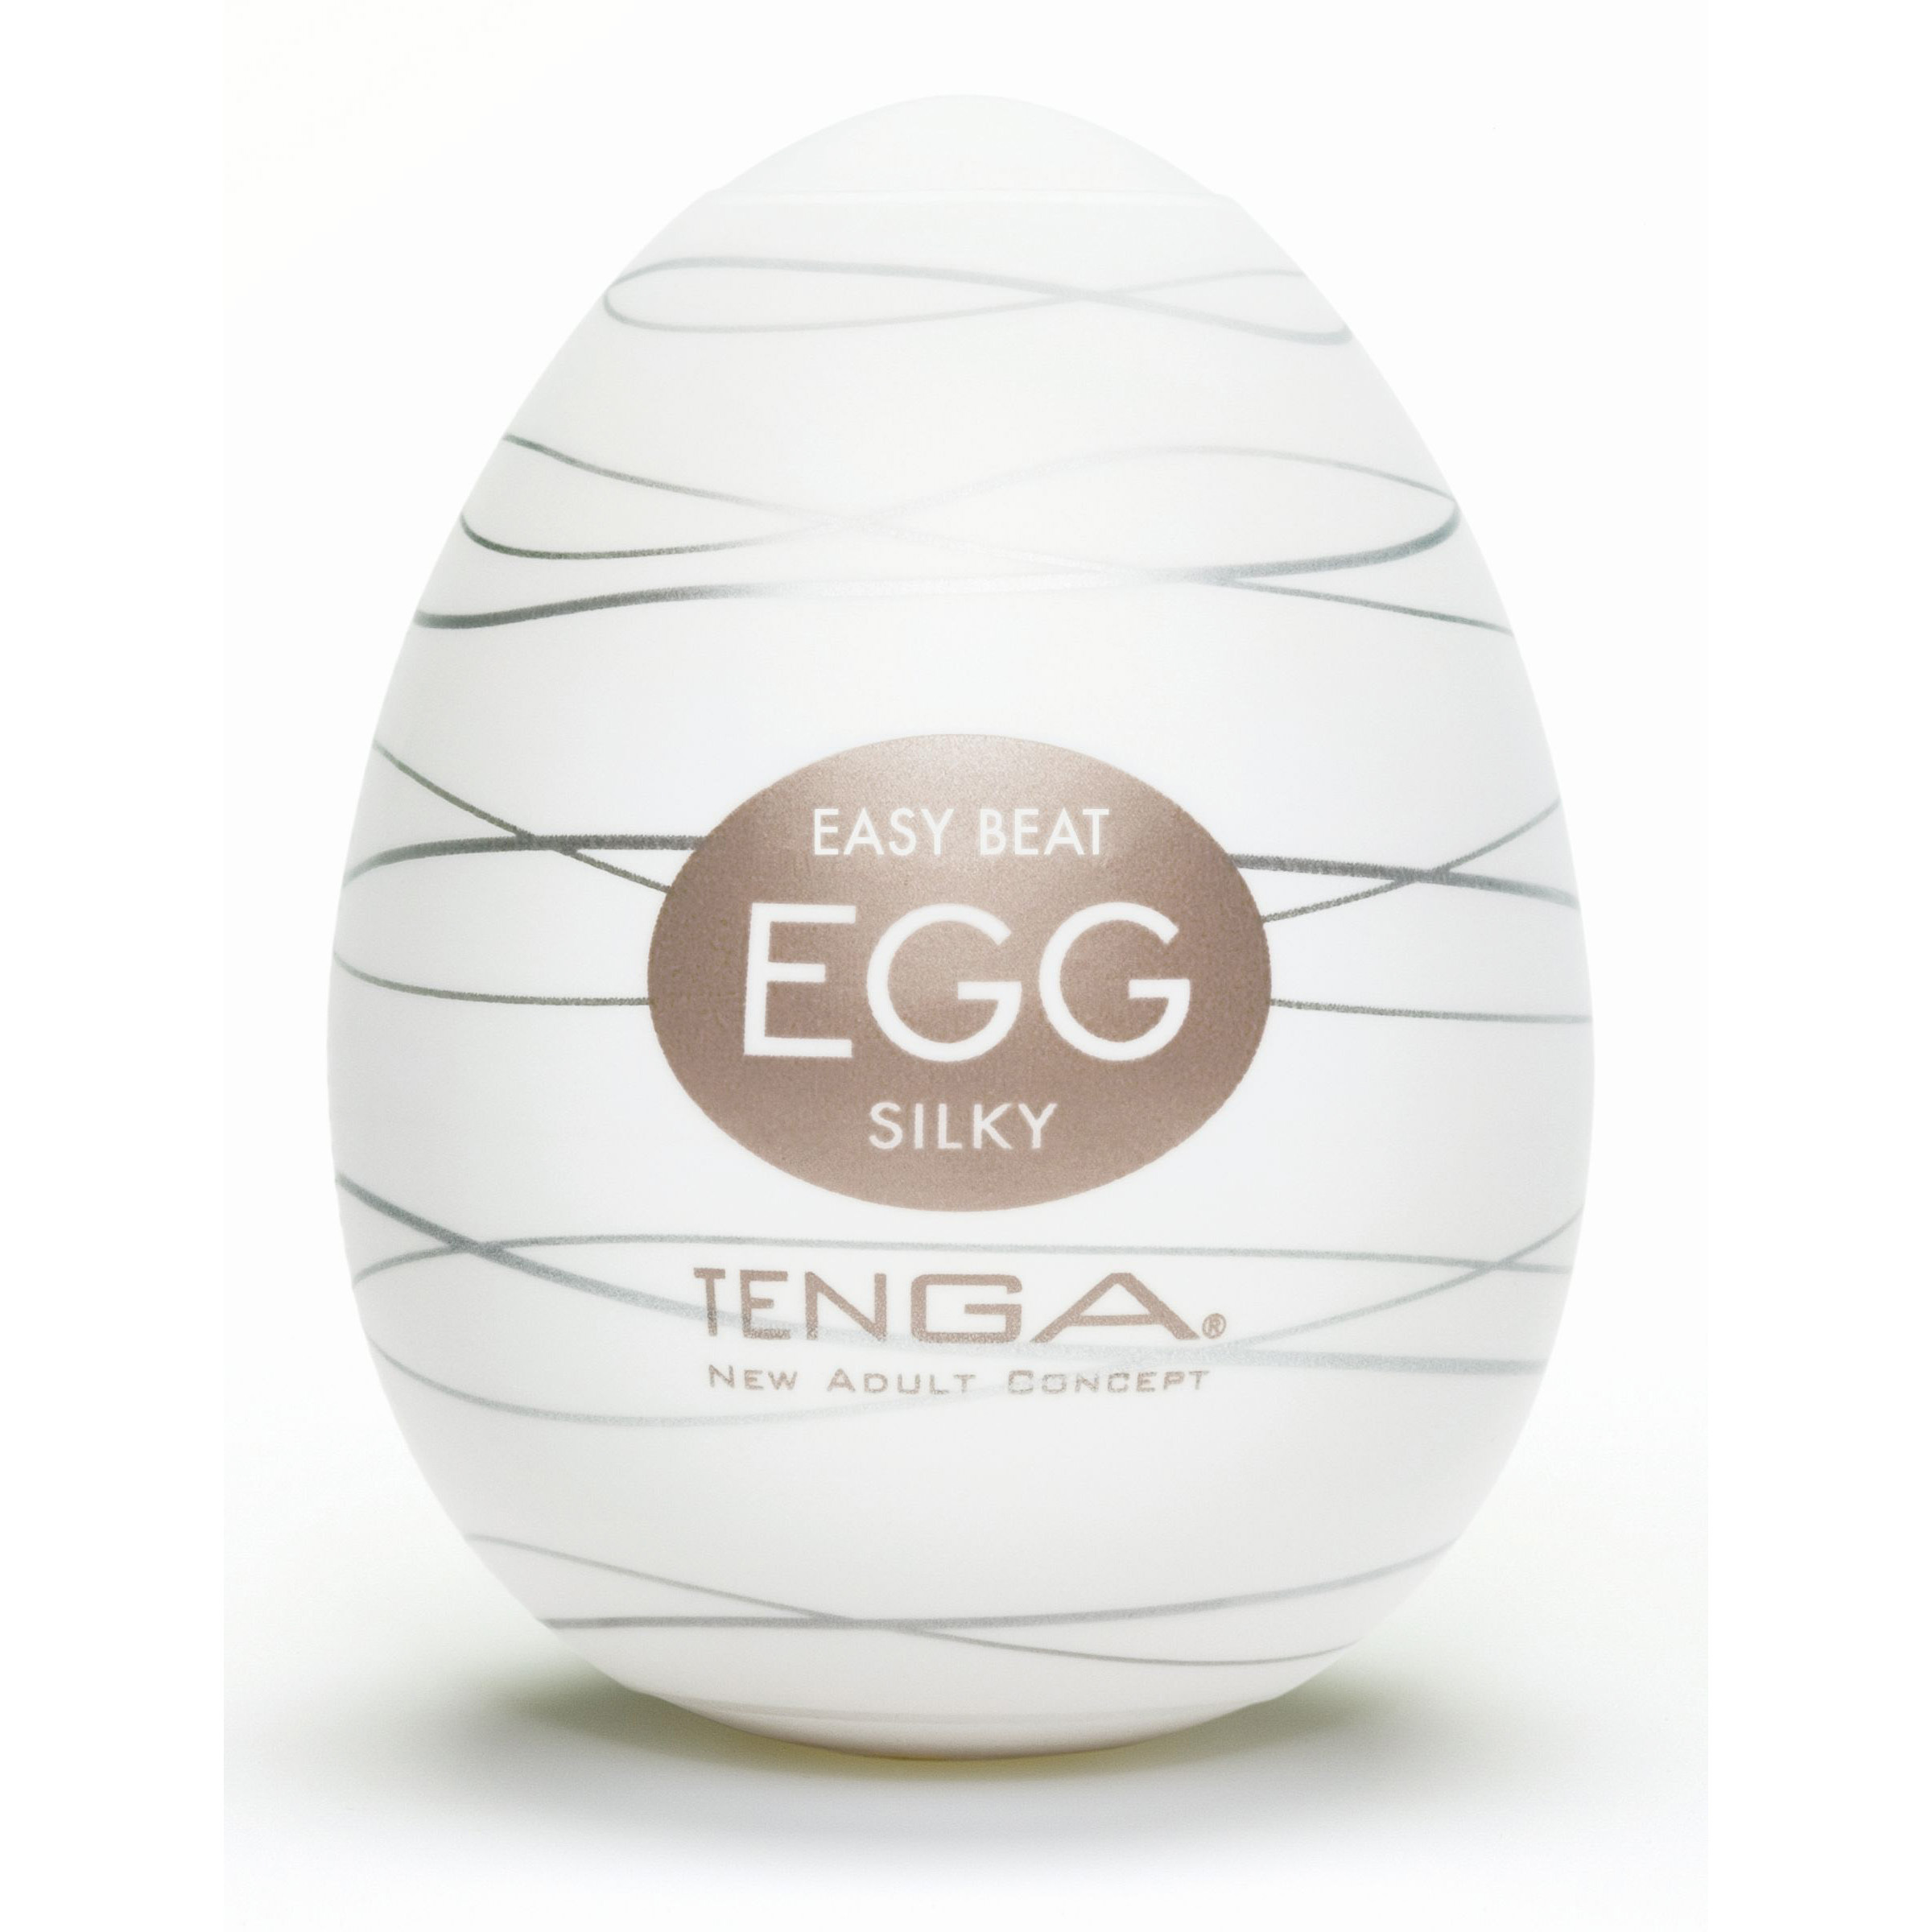 Tenga Egg - Silky | Disposable Male Masturbator Pleasure Device